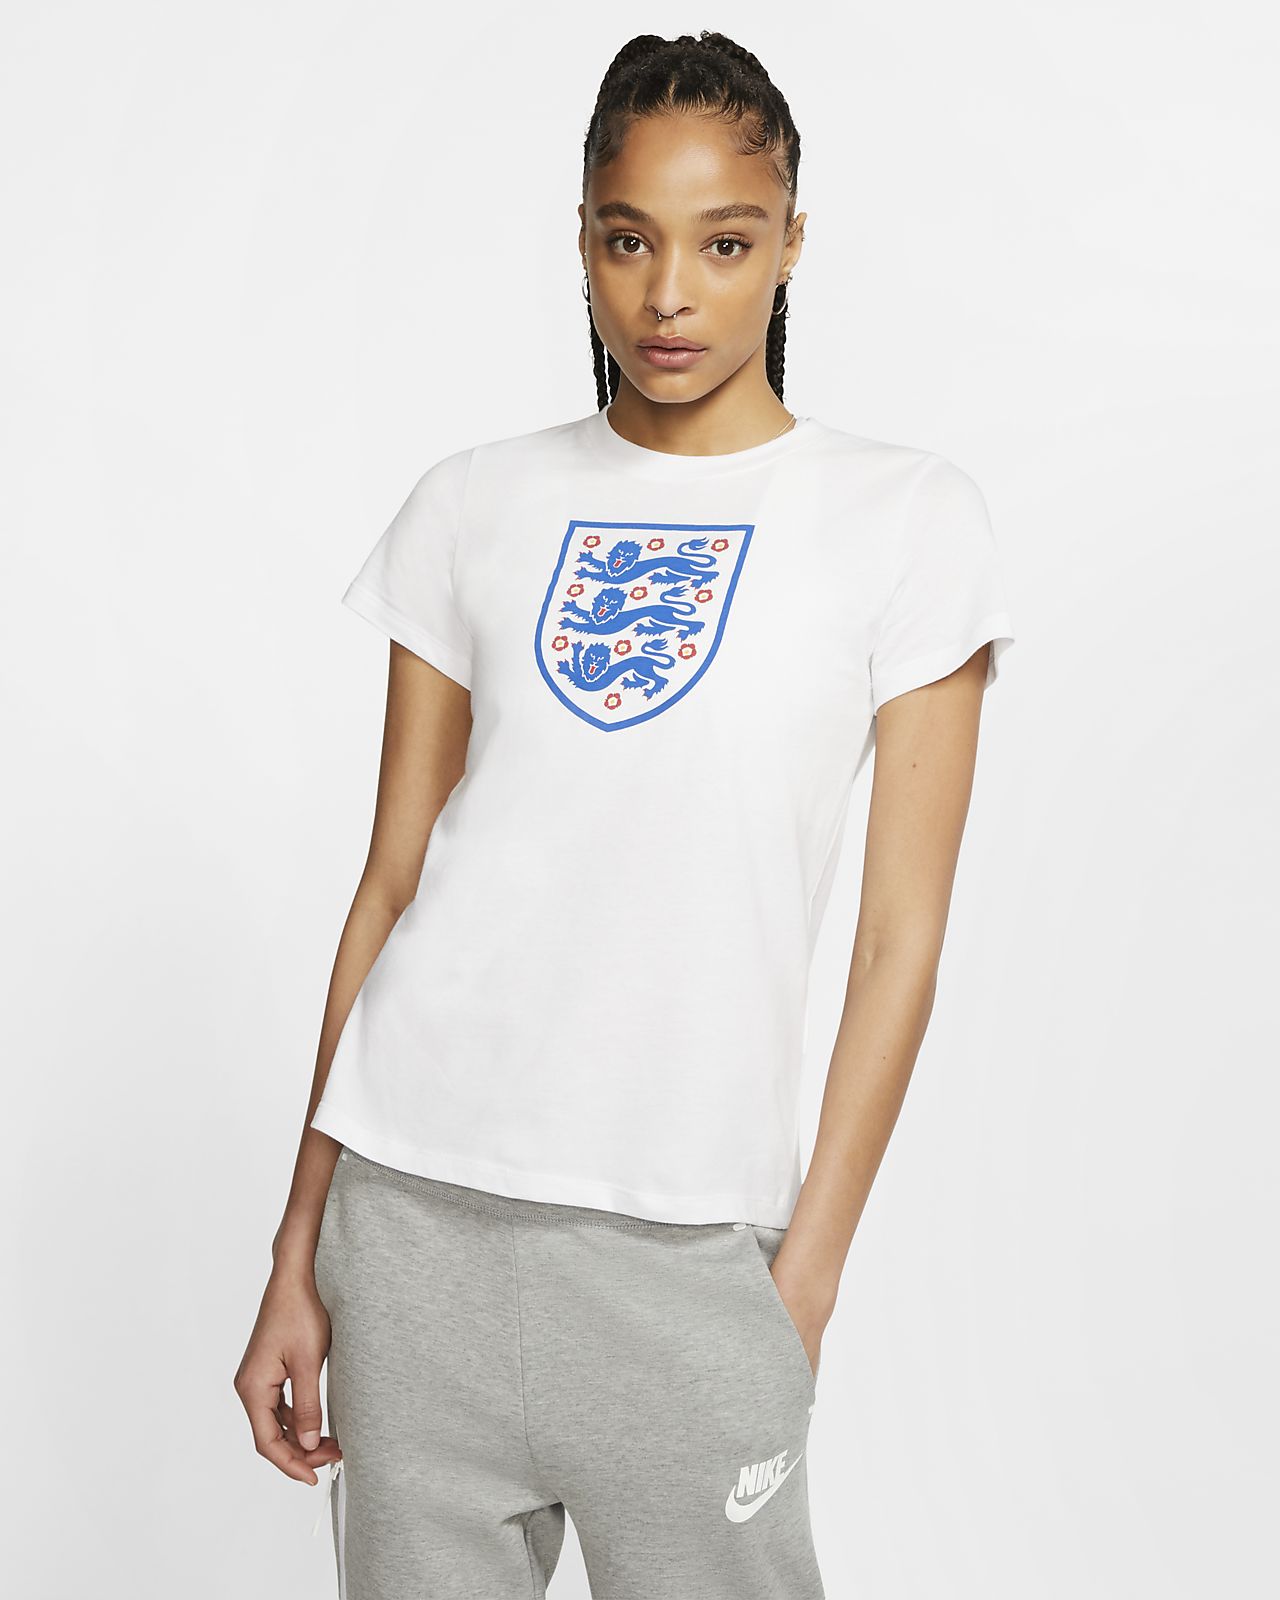 nike womens england football shirt